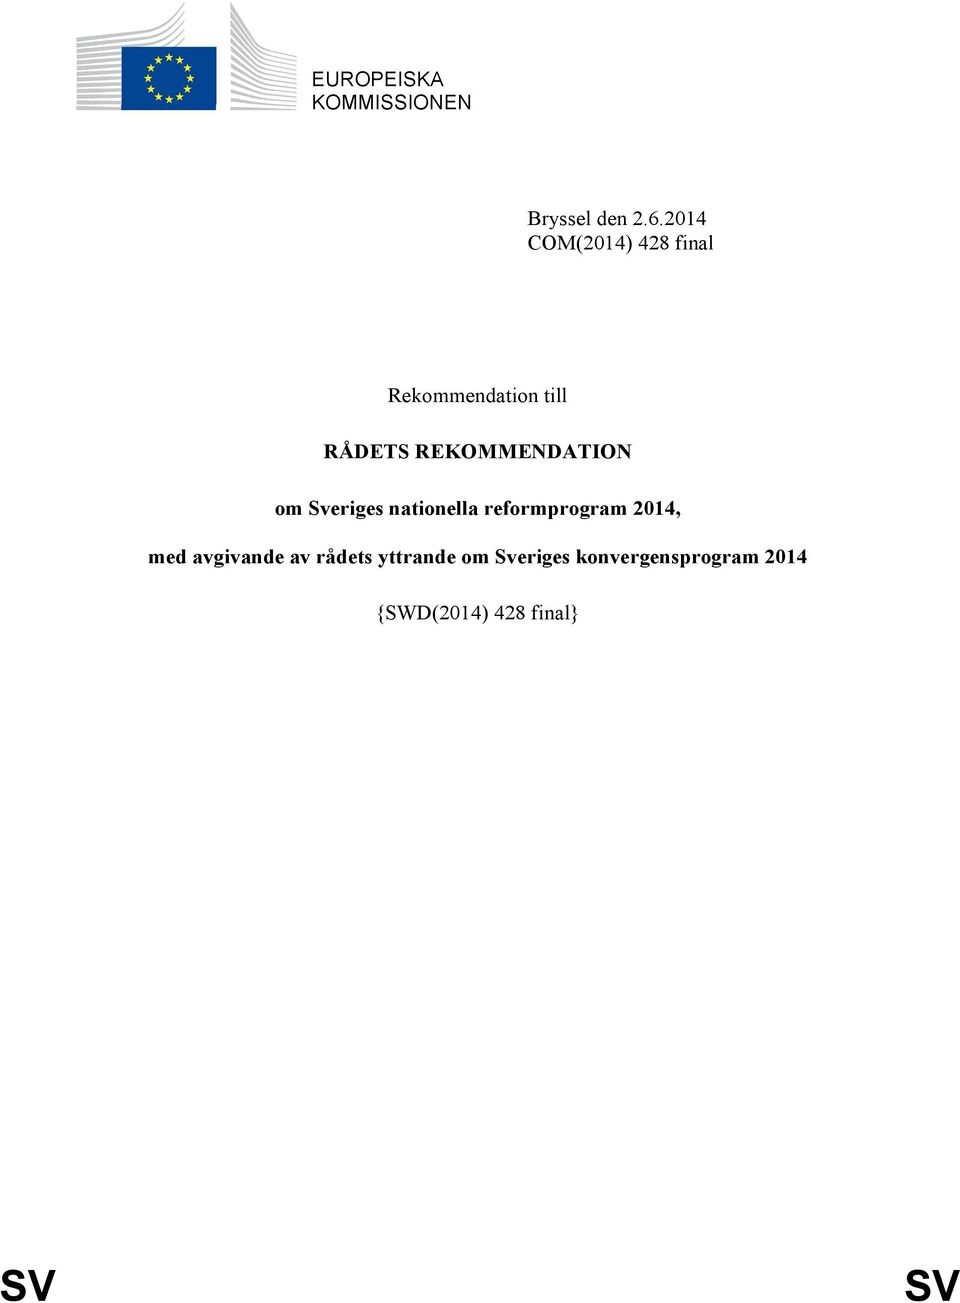 REKOMMENDATION om Sveriges nationella reformprogram 2014, med